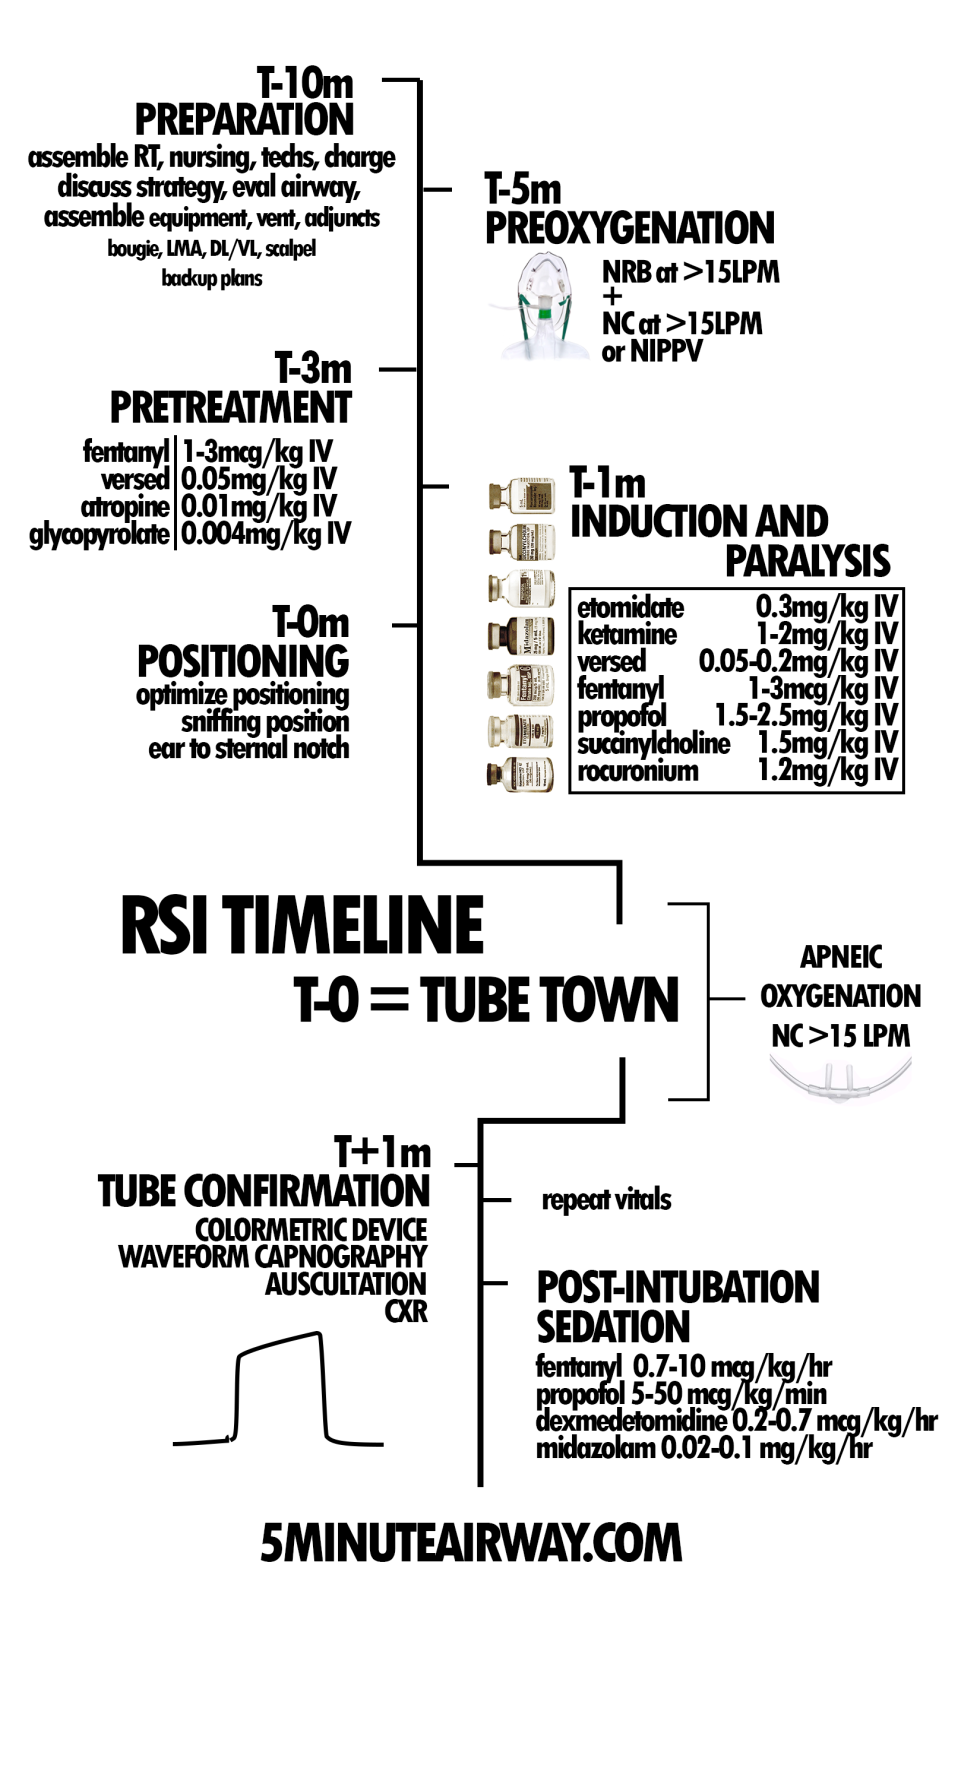 Tube town timeline